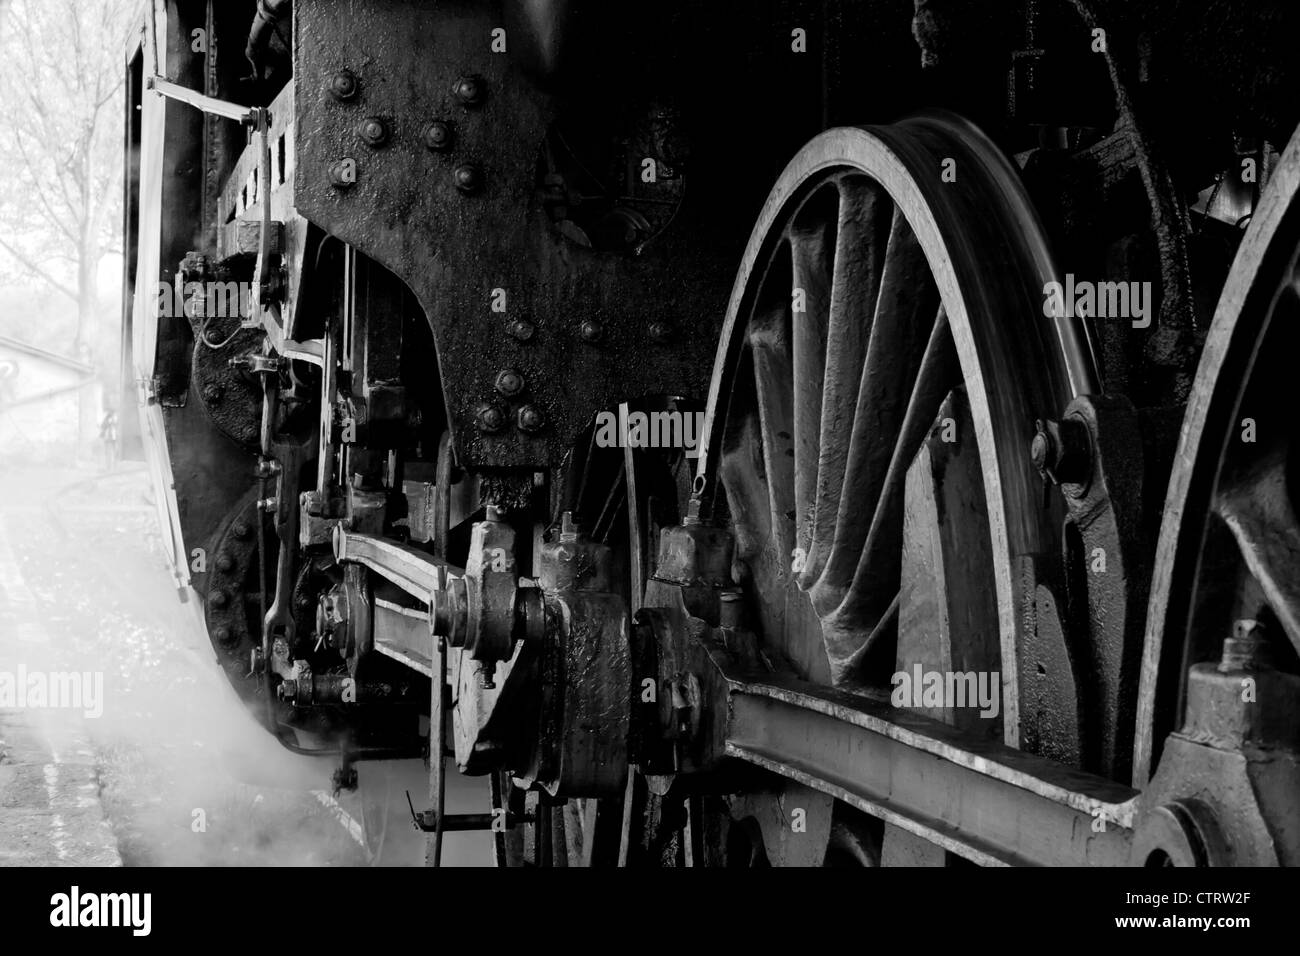 Old steam engine Stock Photo